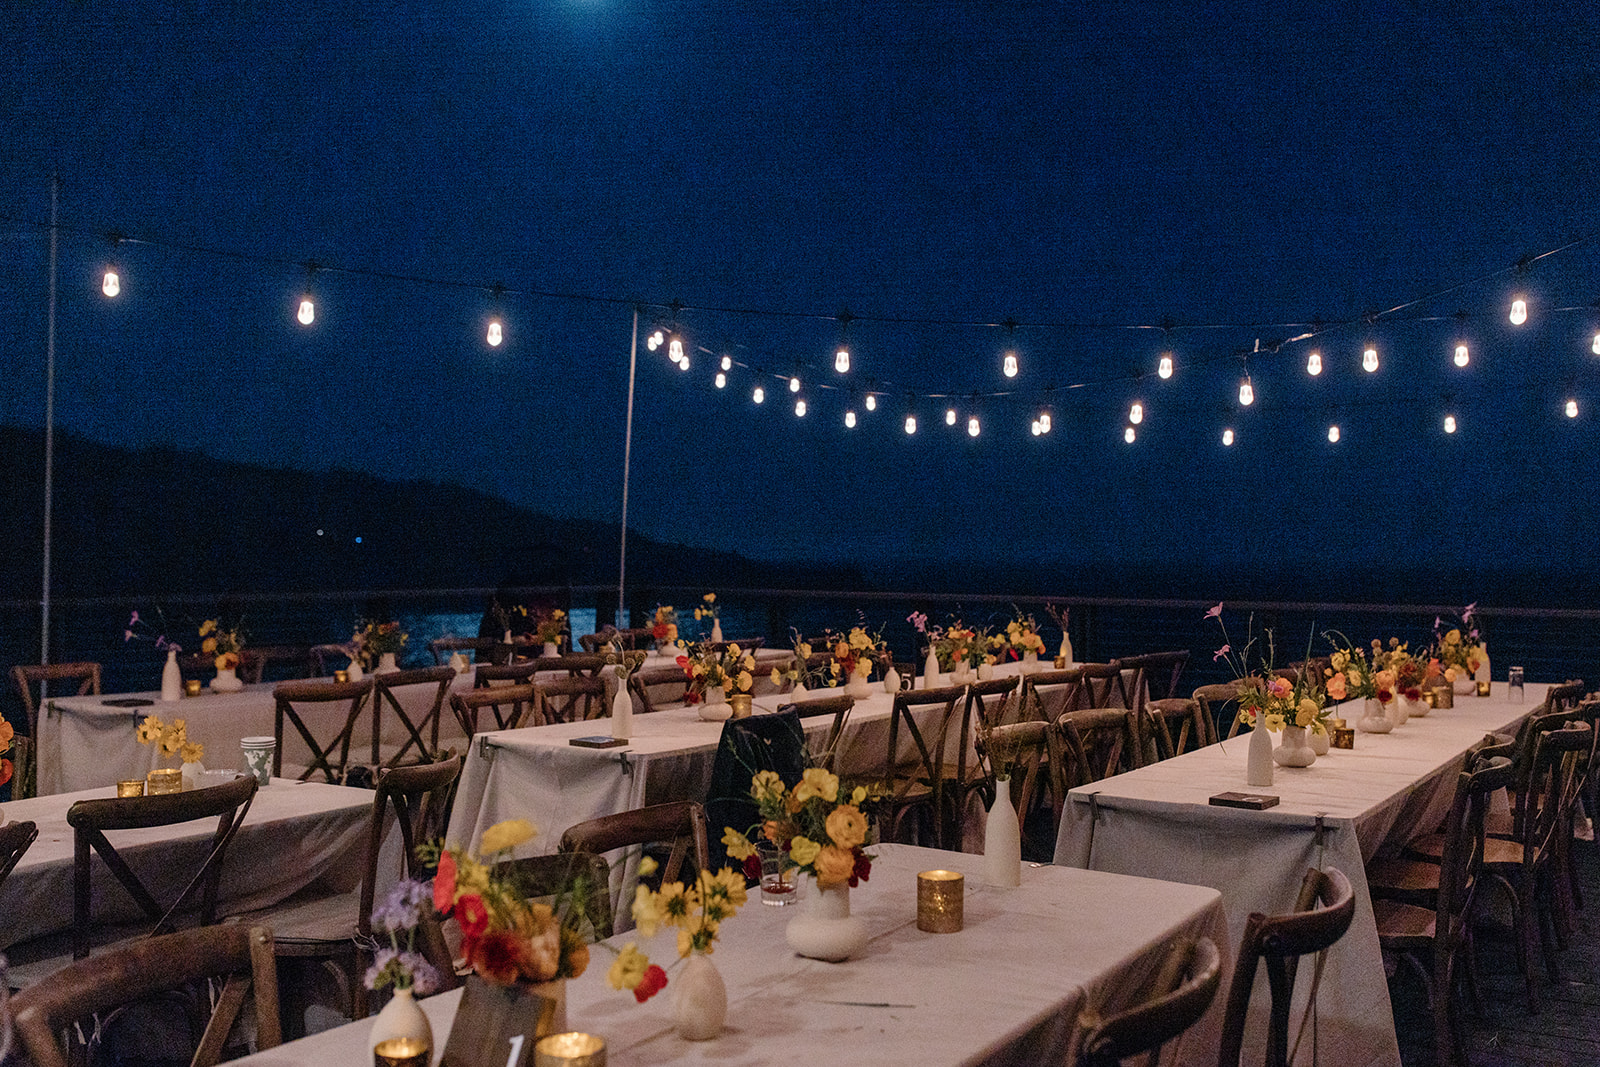 Intimate coastal wedding at Timber Cove Resort in Jenner California 